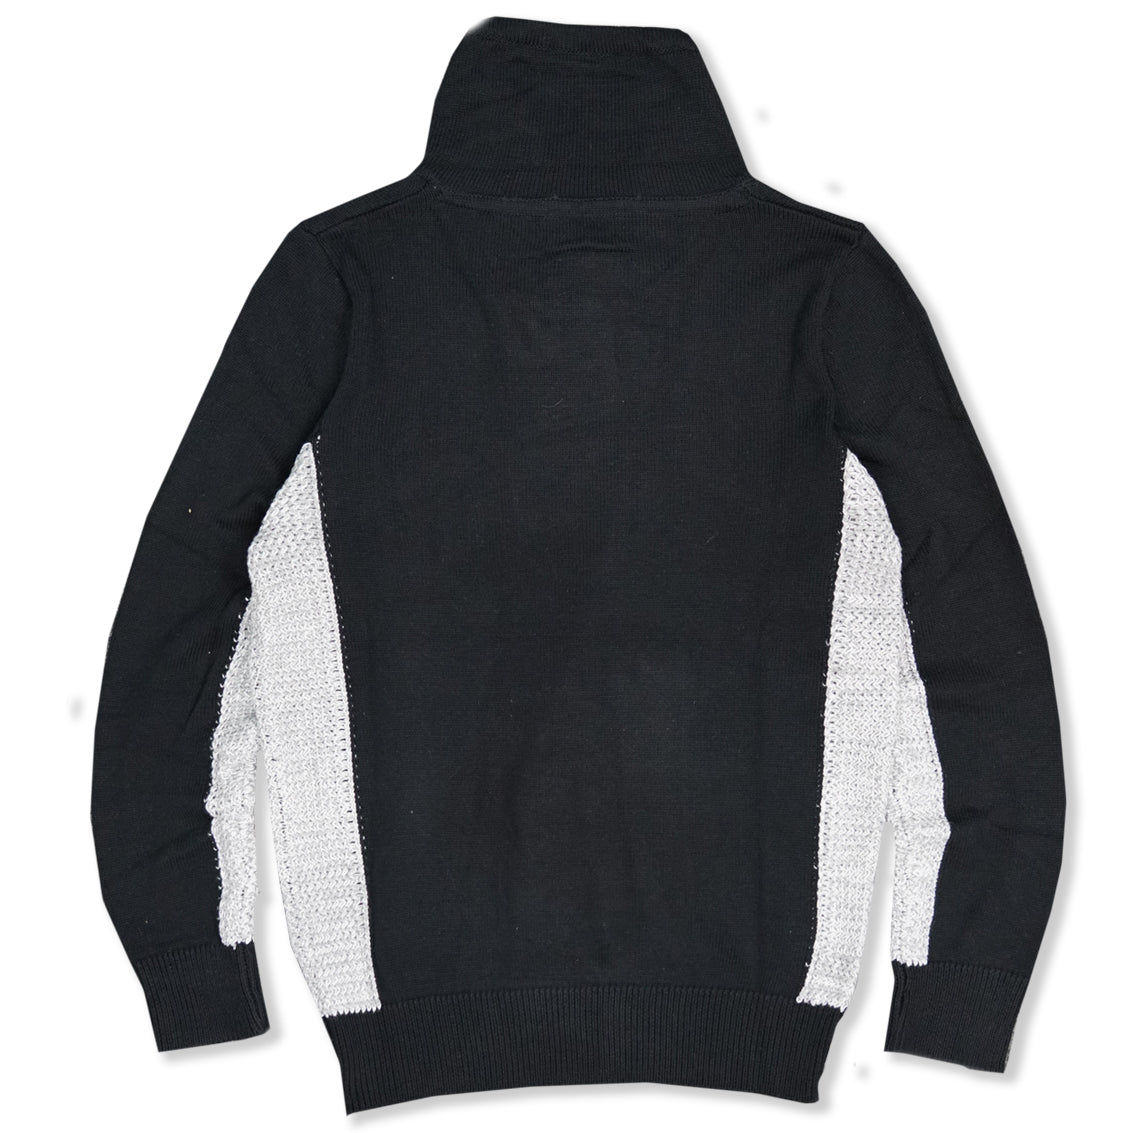 M5040 Shawl Collar Knit Sweater - Black/Gray